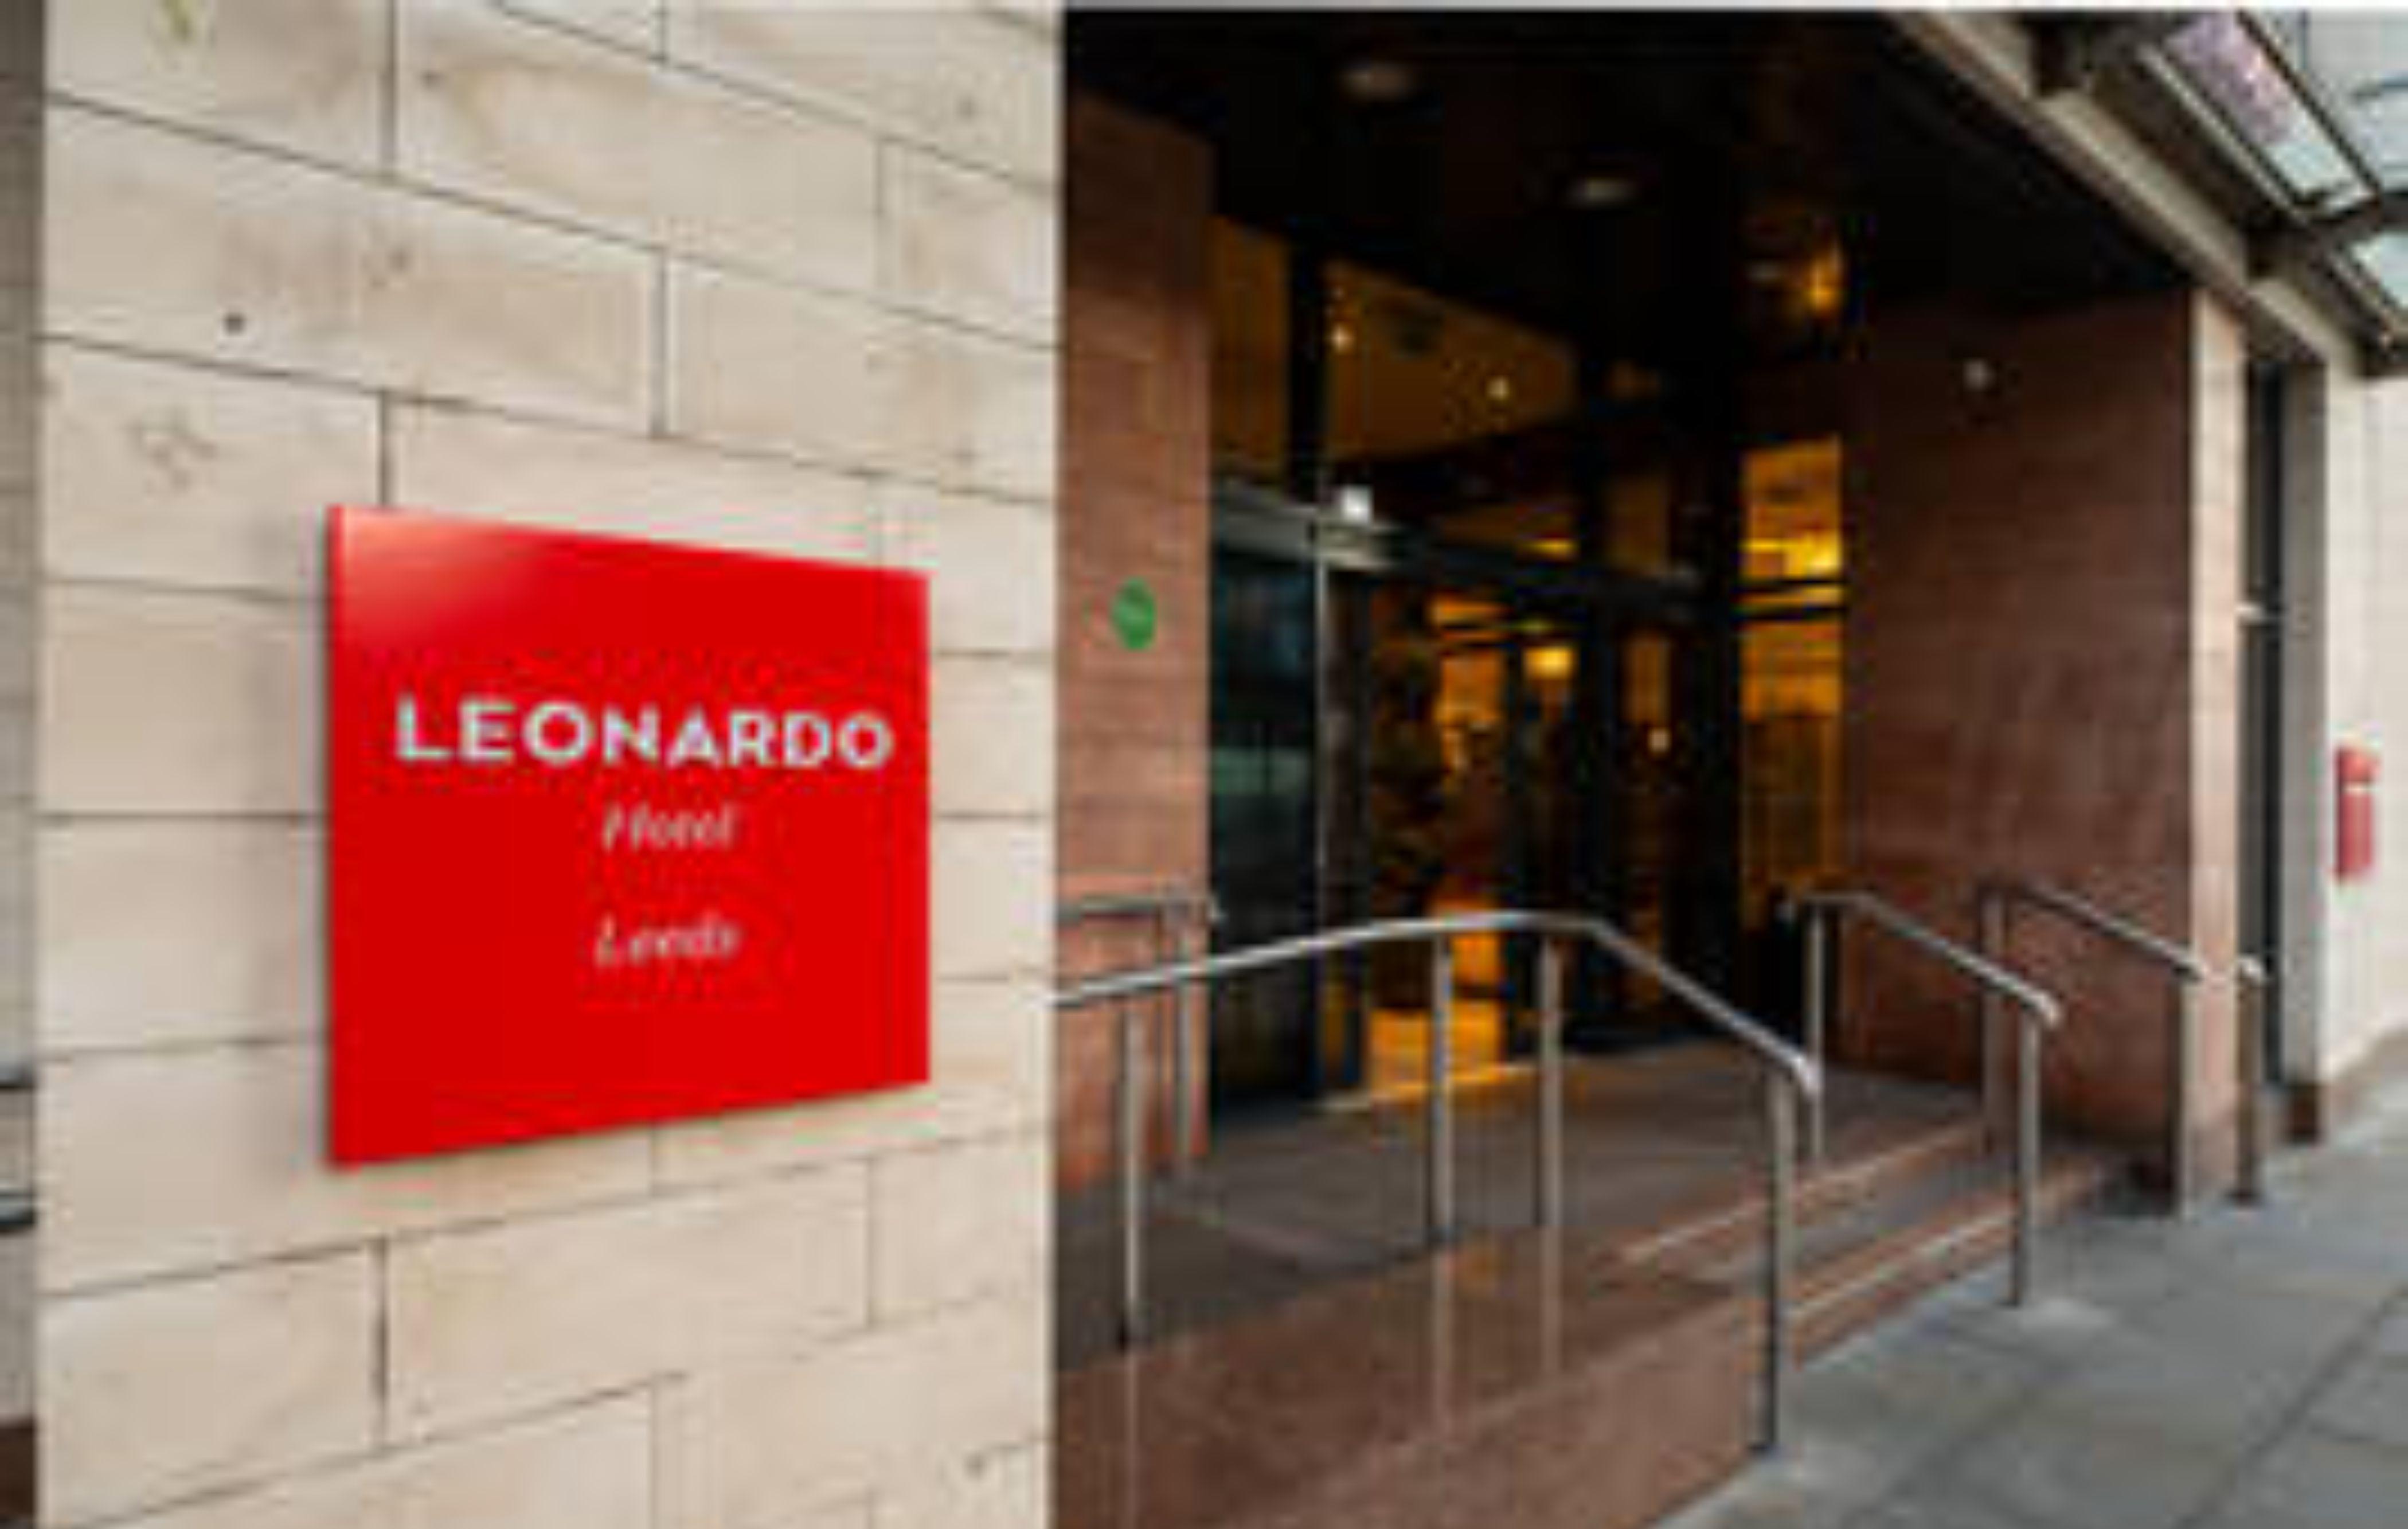 Leonardo Hotel Leeds Leeds 01132 838800